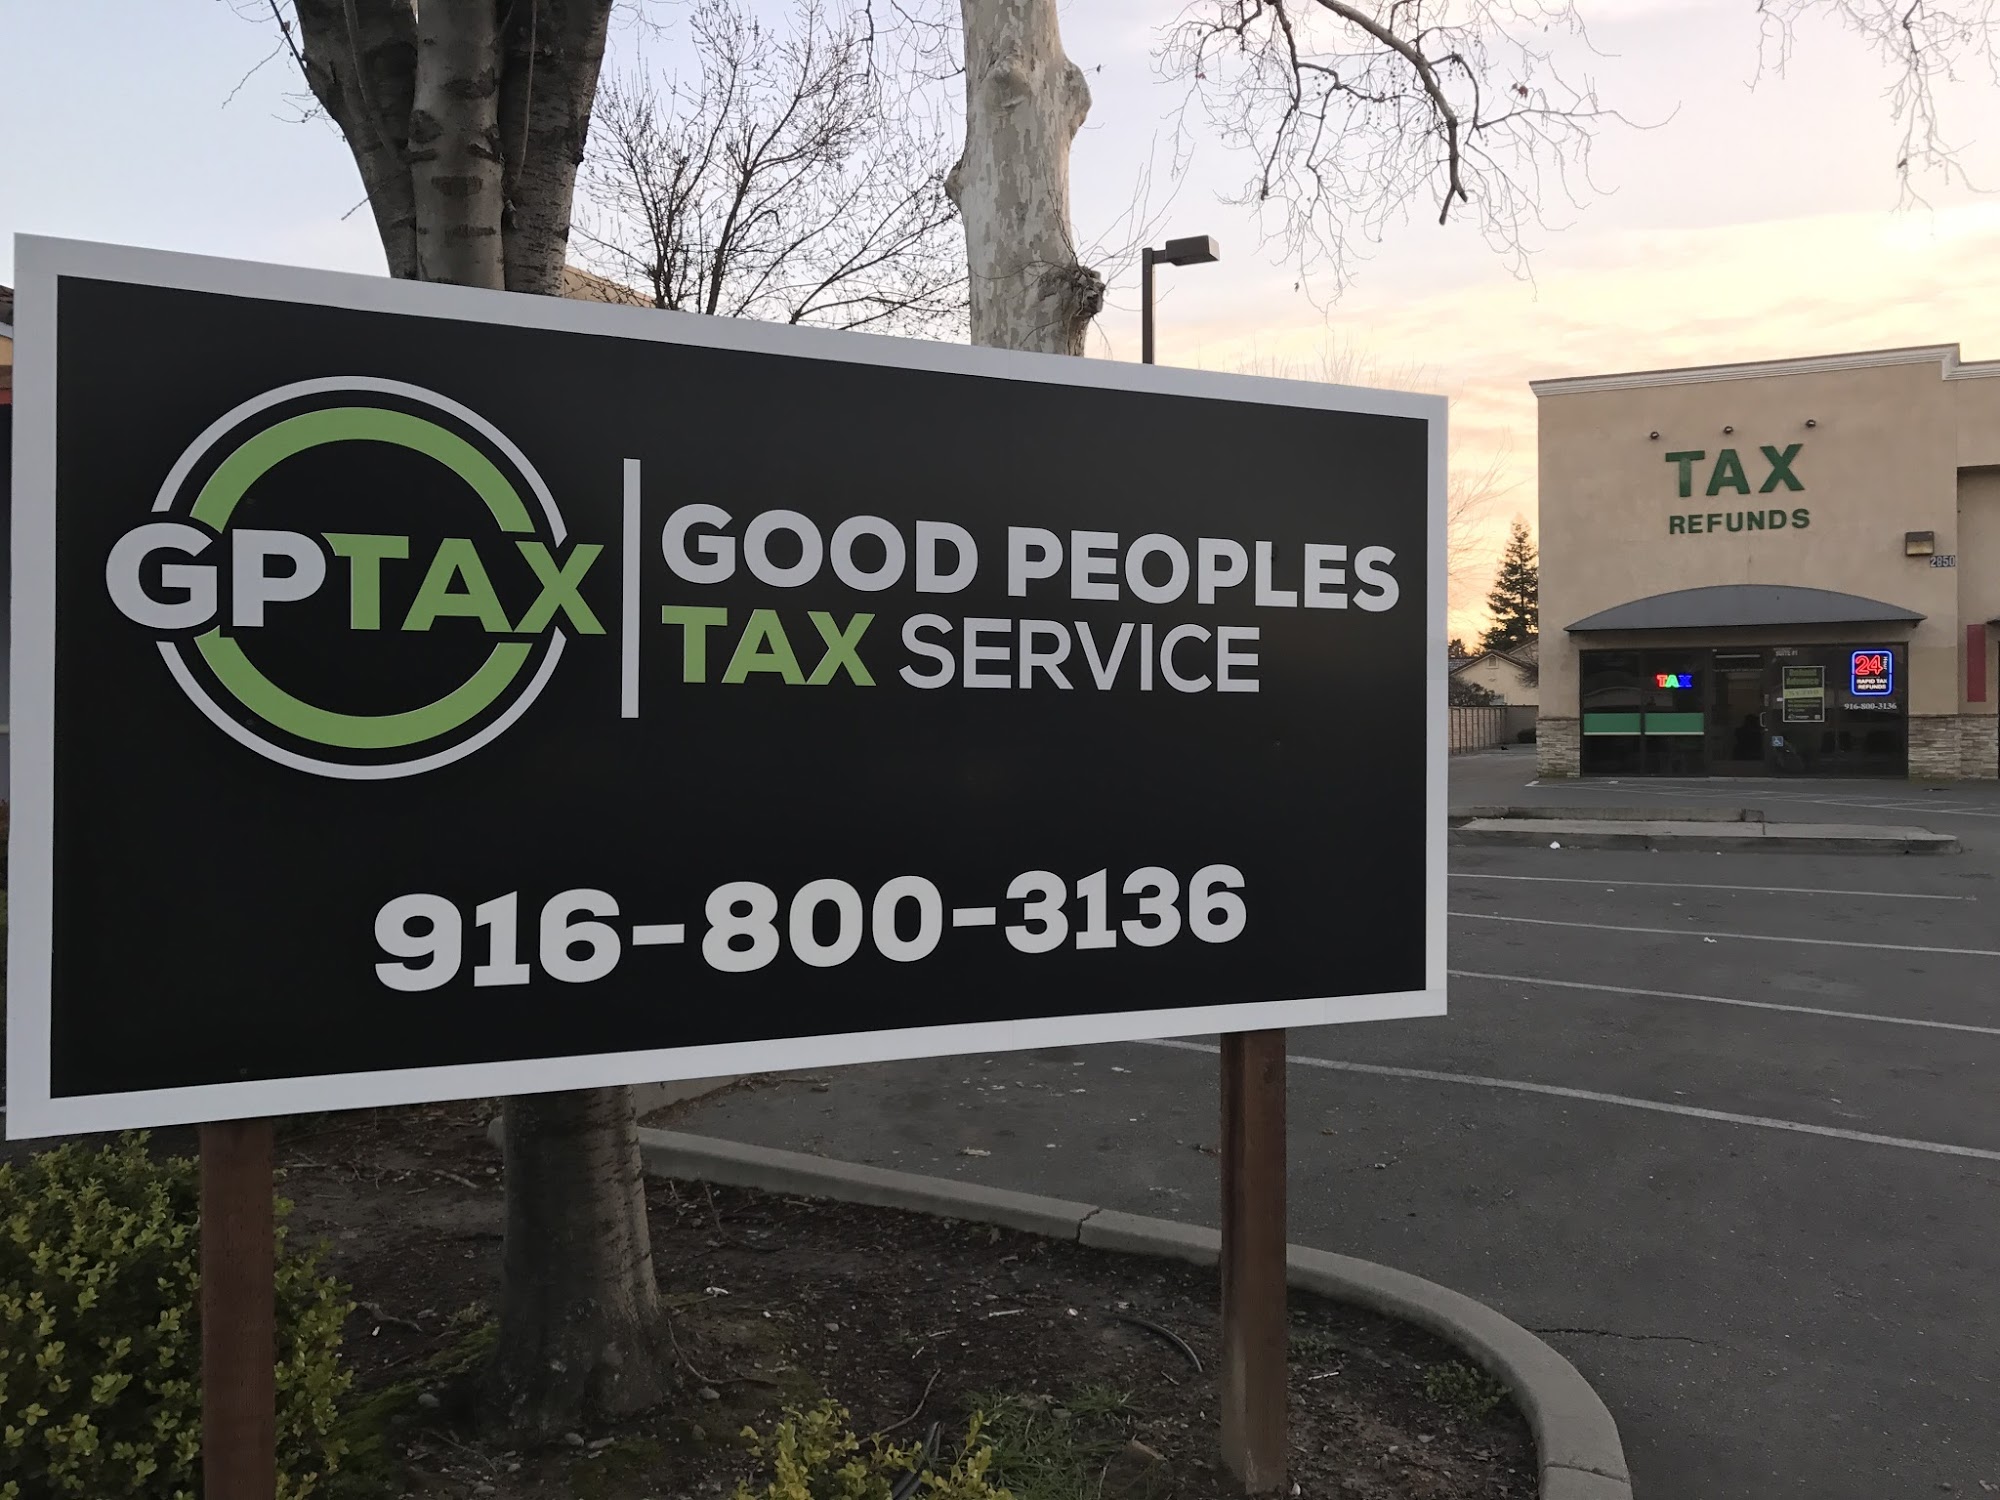 Good People Tax Service